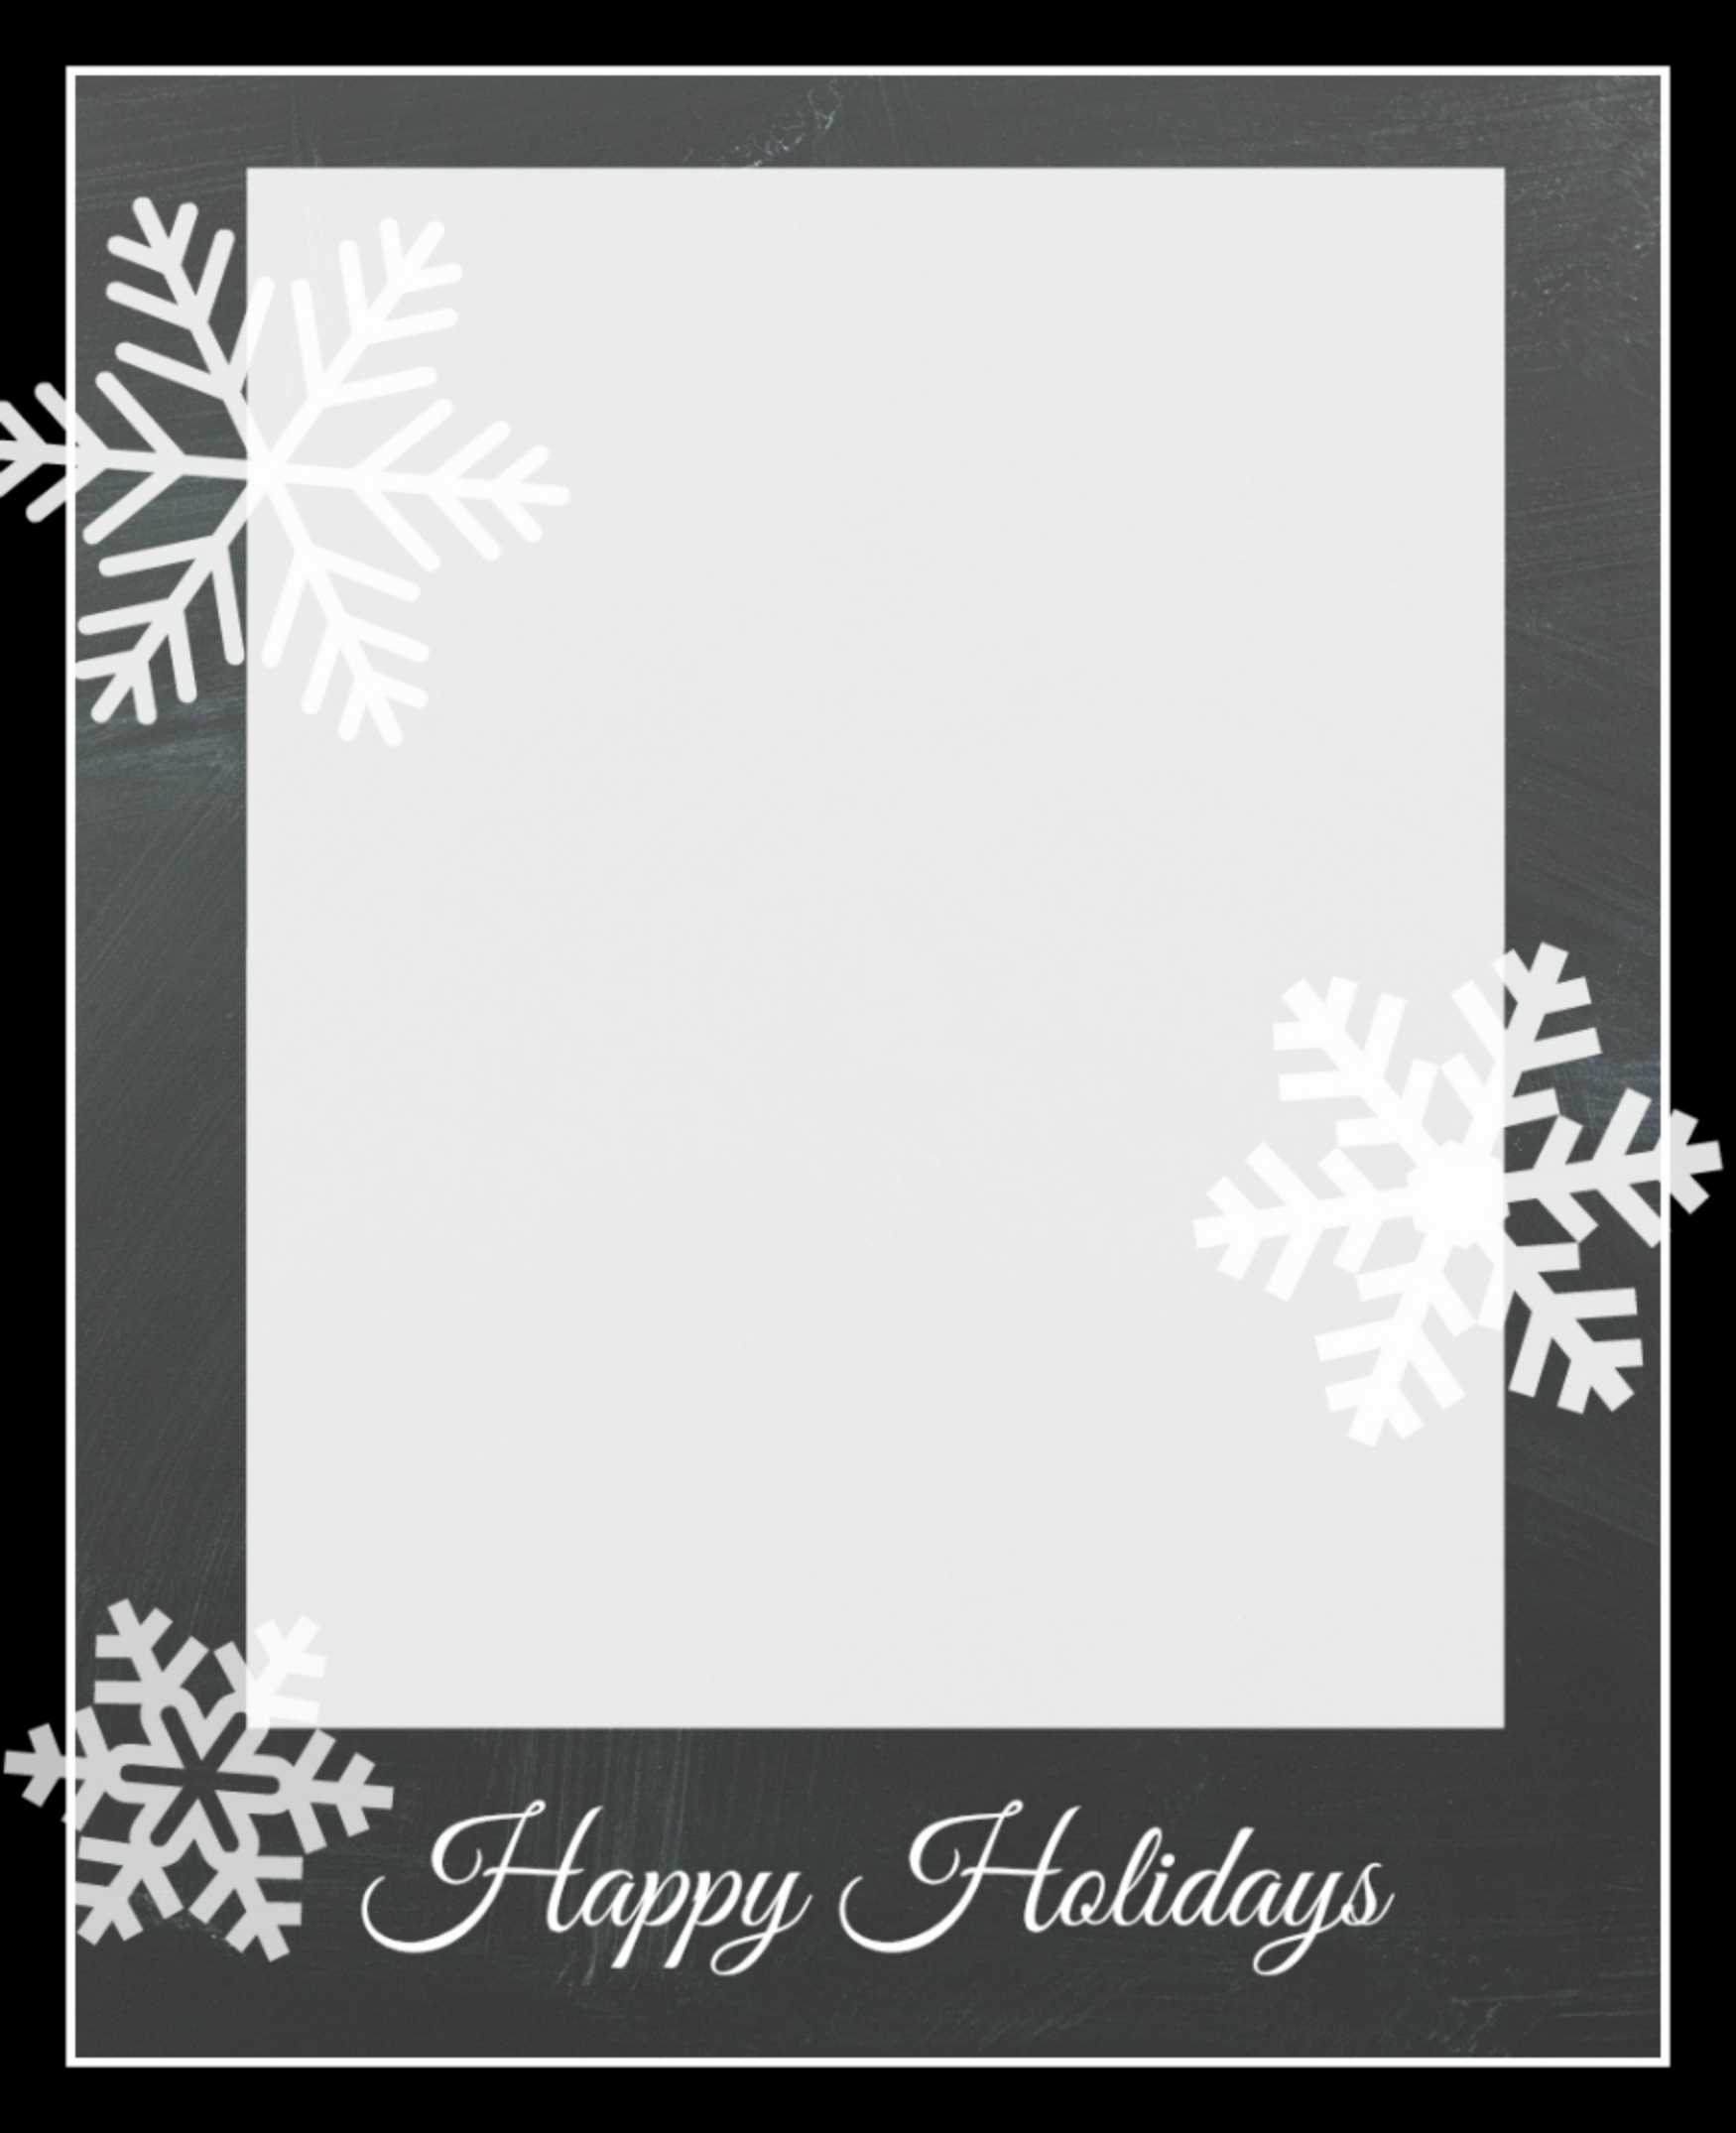 Free Christmas Card Template - Dalep.midnightpig.co Regarding Free Holiday Photo Card Templates